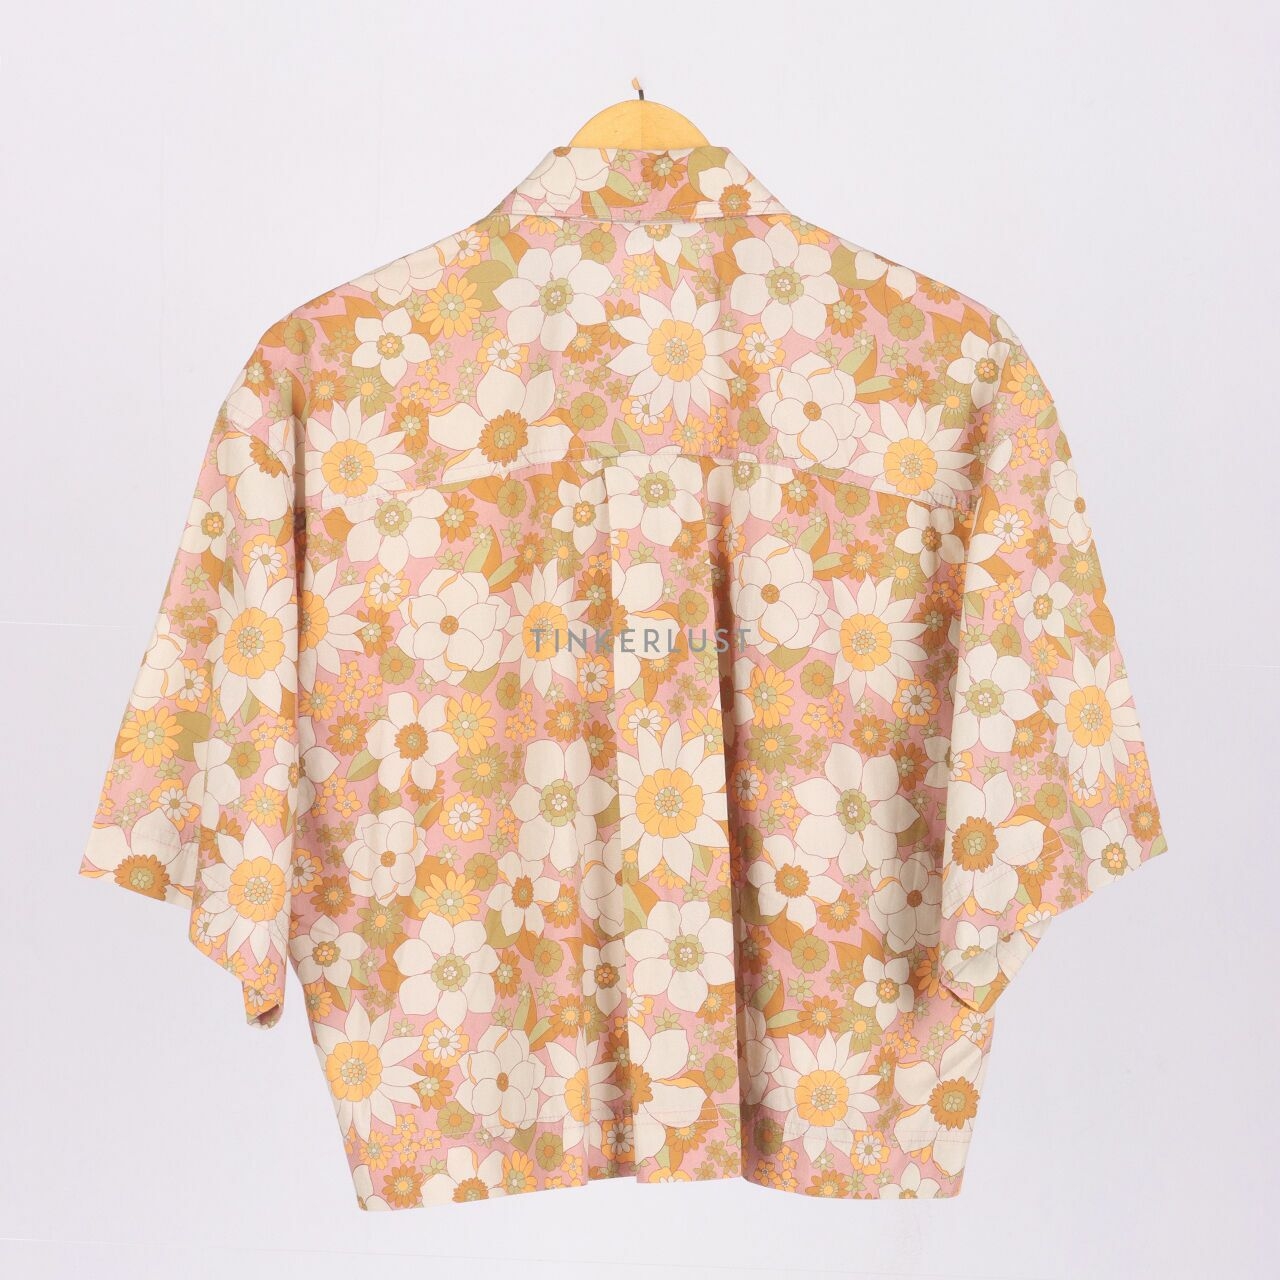 Zara Multi Floral Shirt